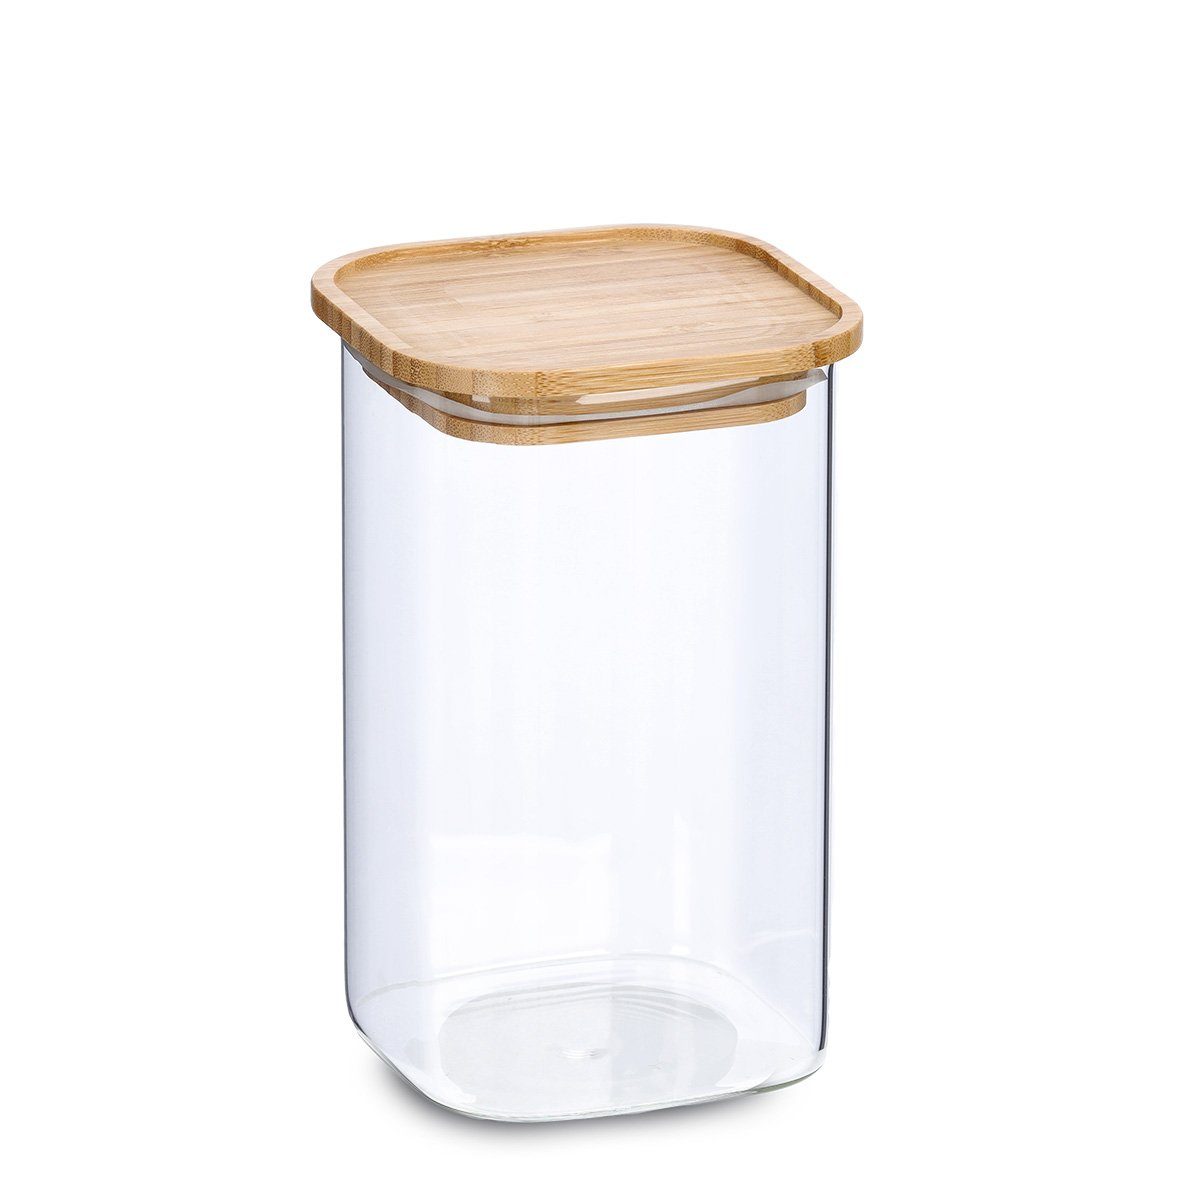 Zeller Present Badaccessoire-Set Vorratsglas m. Bambusdeckel, 1300 ml, Borosilikat Glas / Bambus / Silikon, transparent, ca. 10 x 10 x 17,7 cm